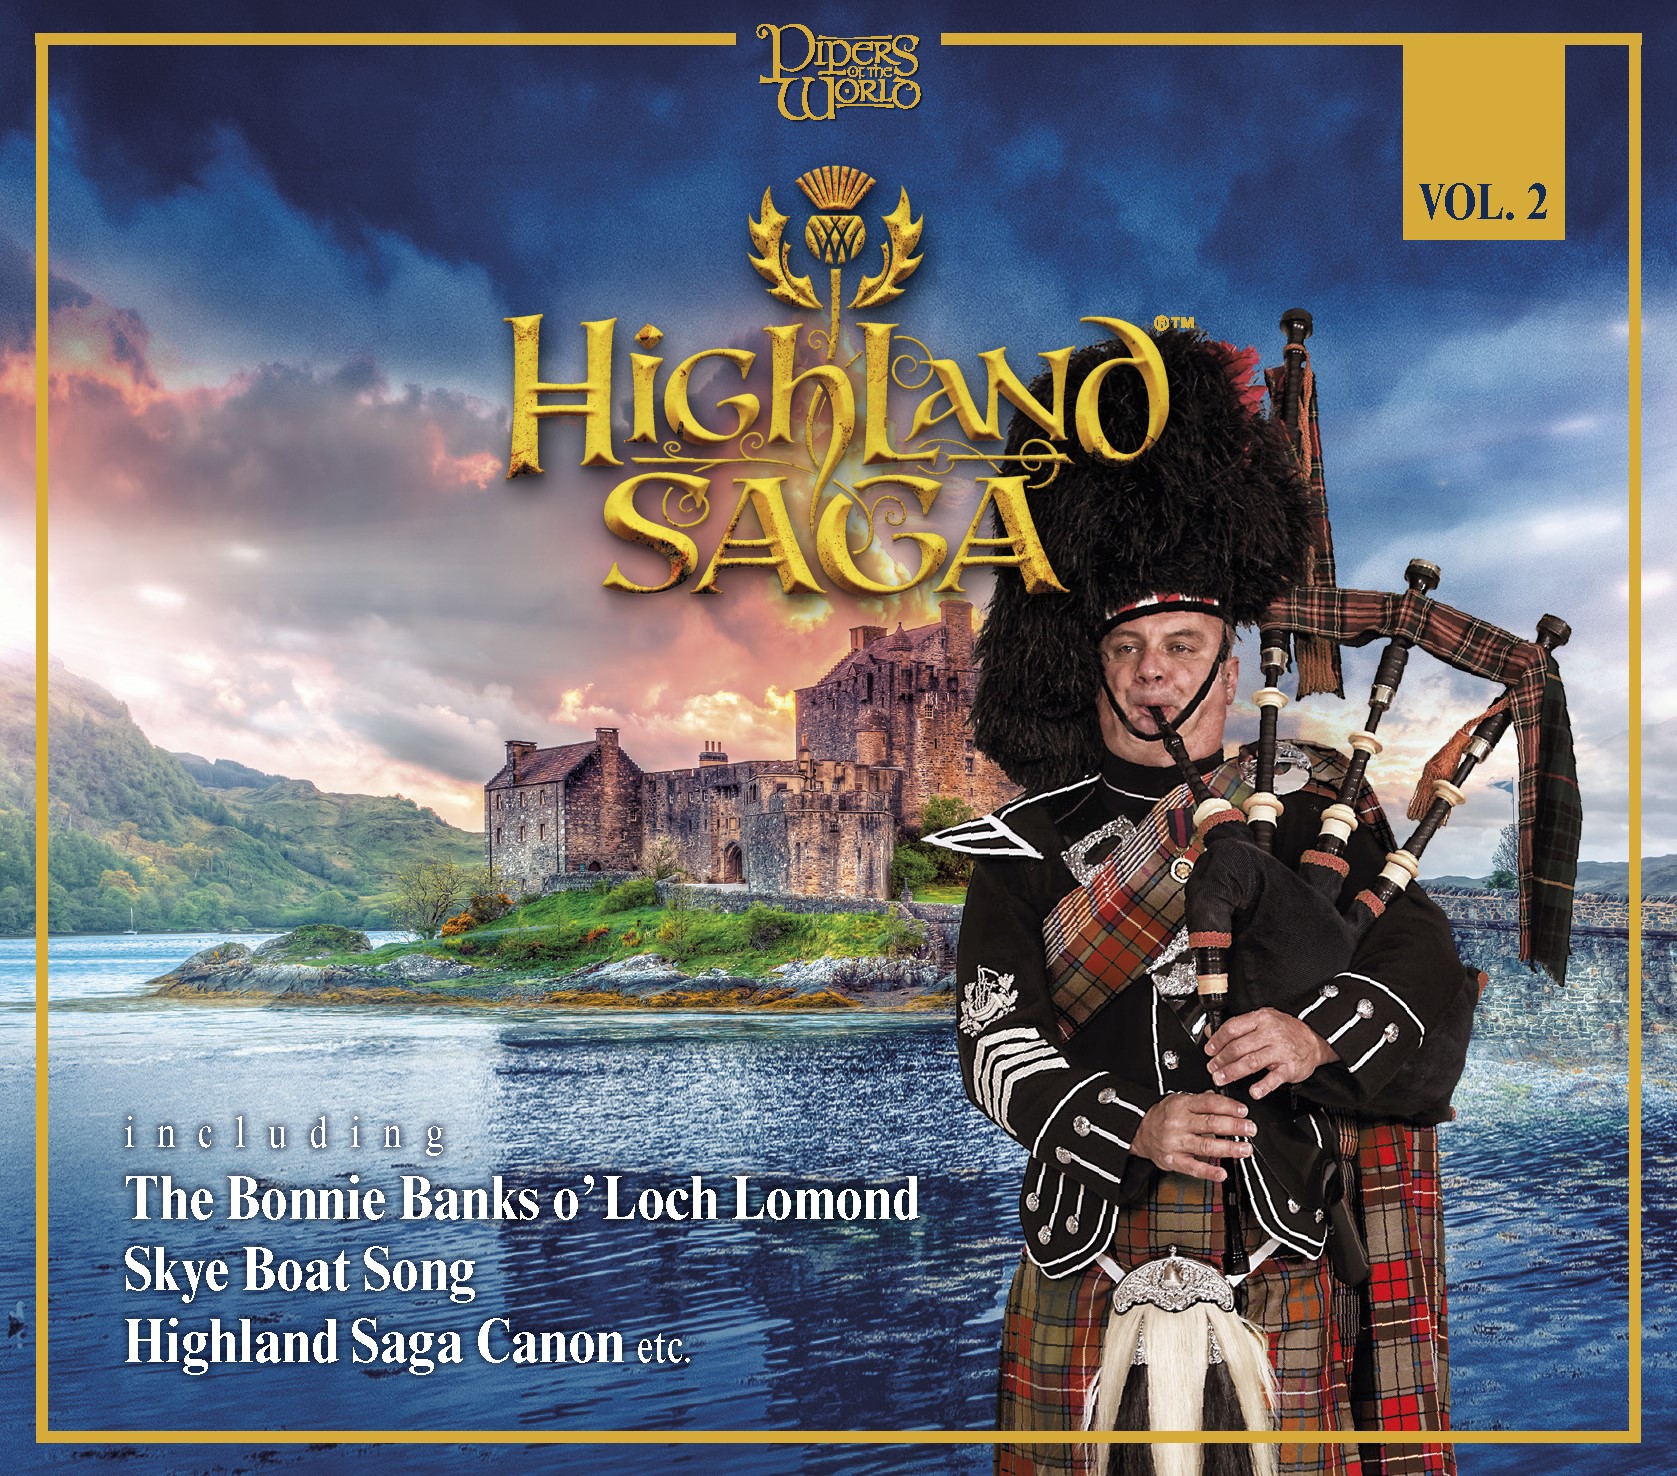 PIPERS OF THE WORLD Vol.2 – Highland Saga